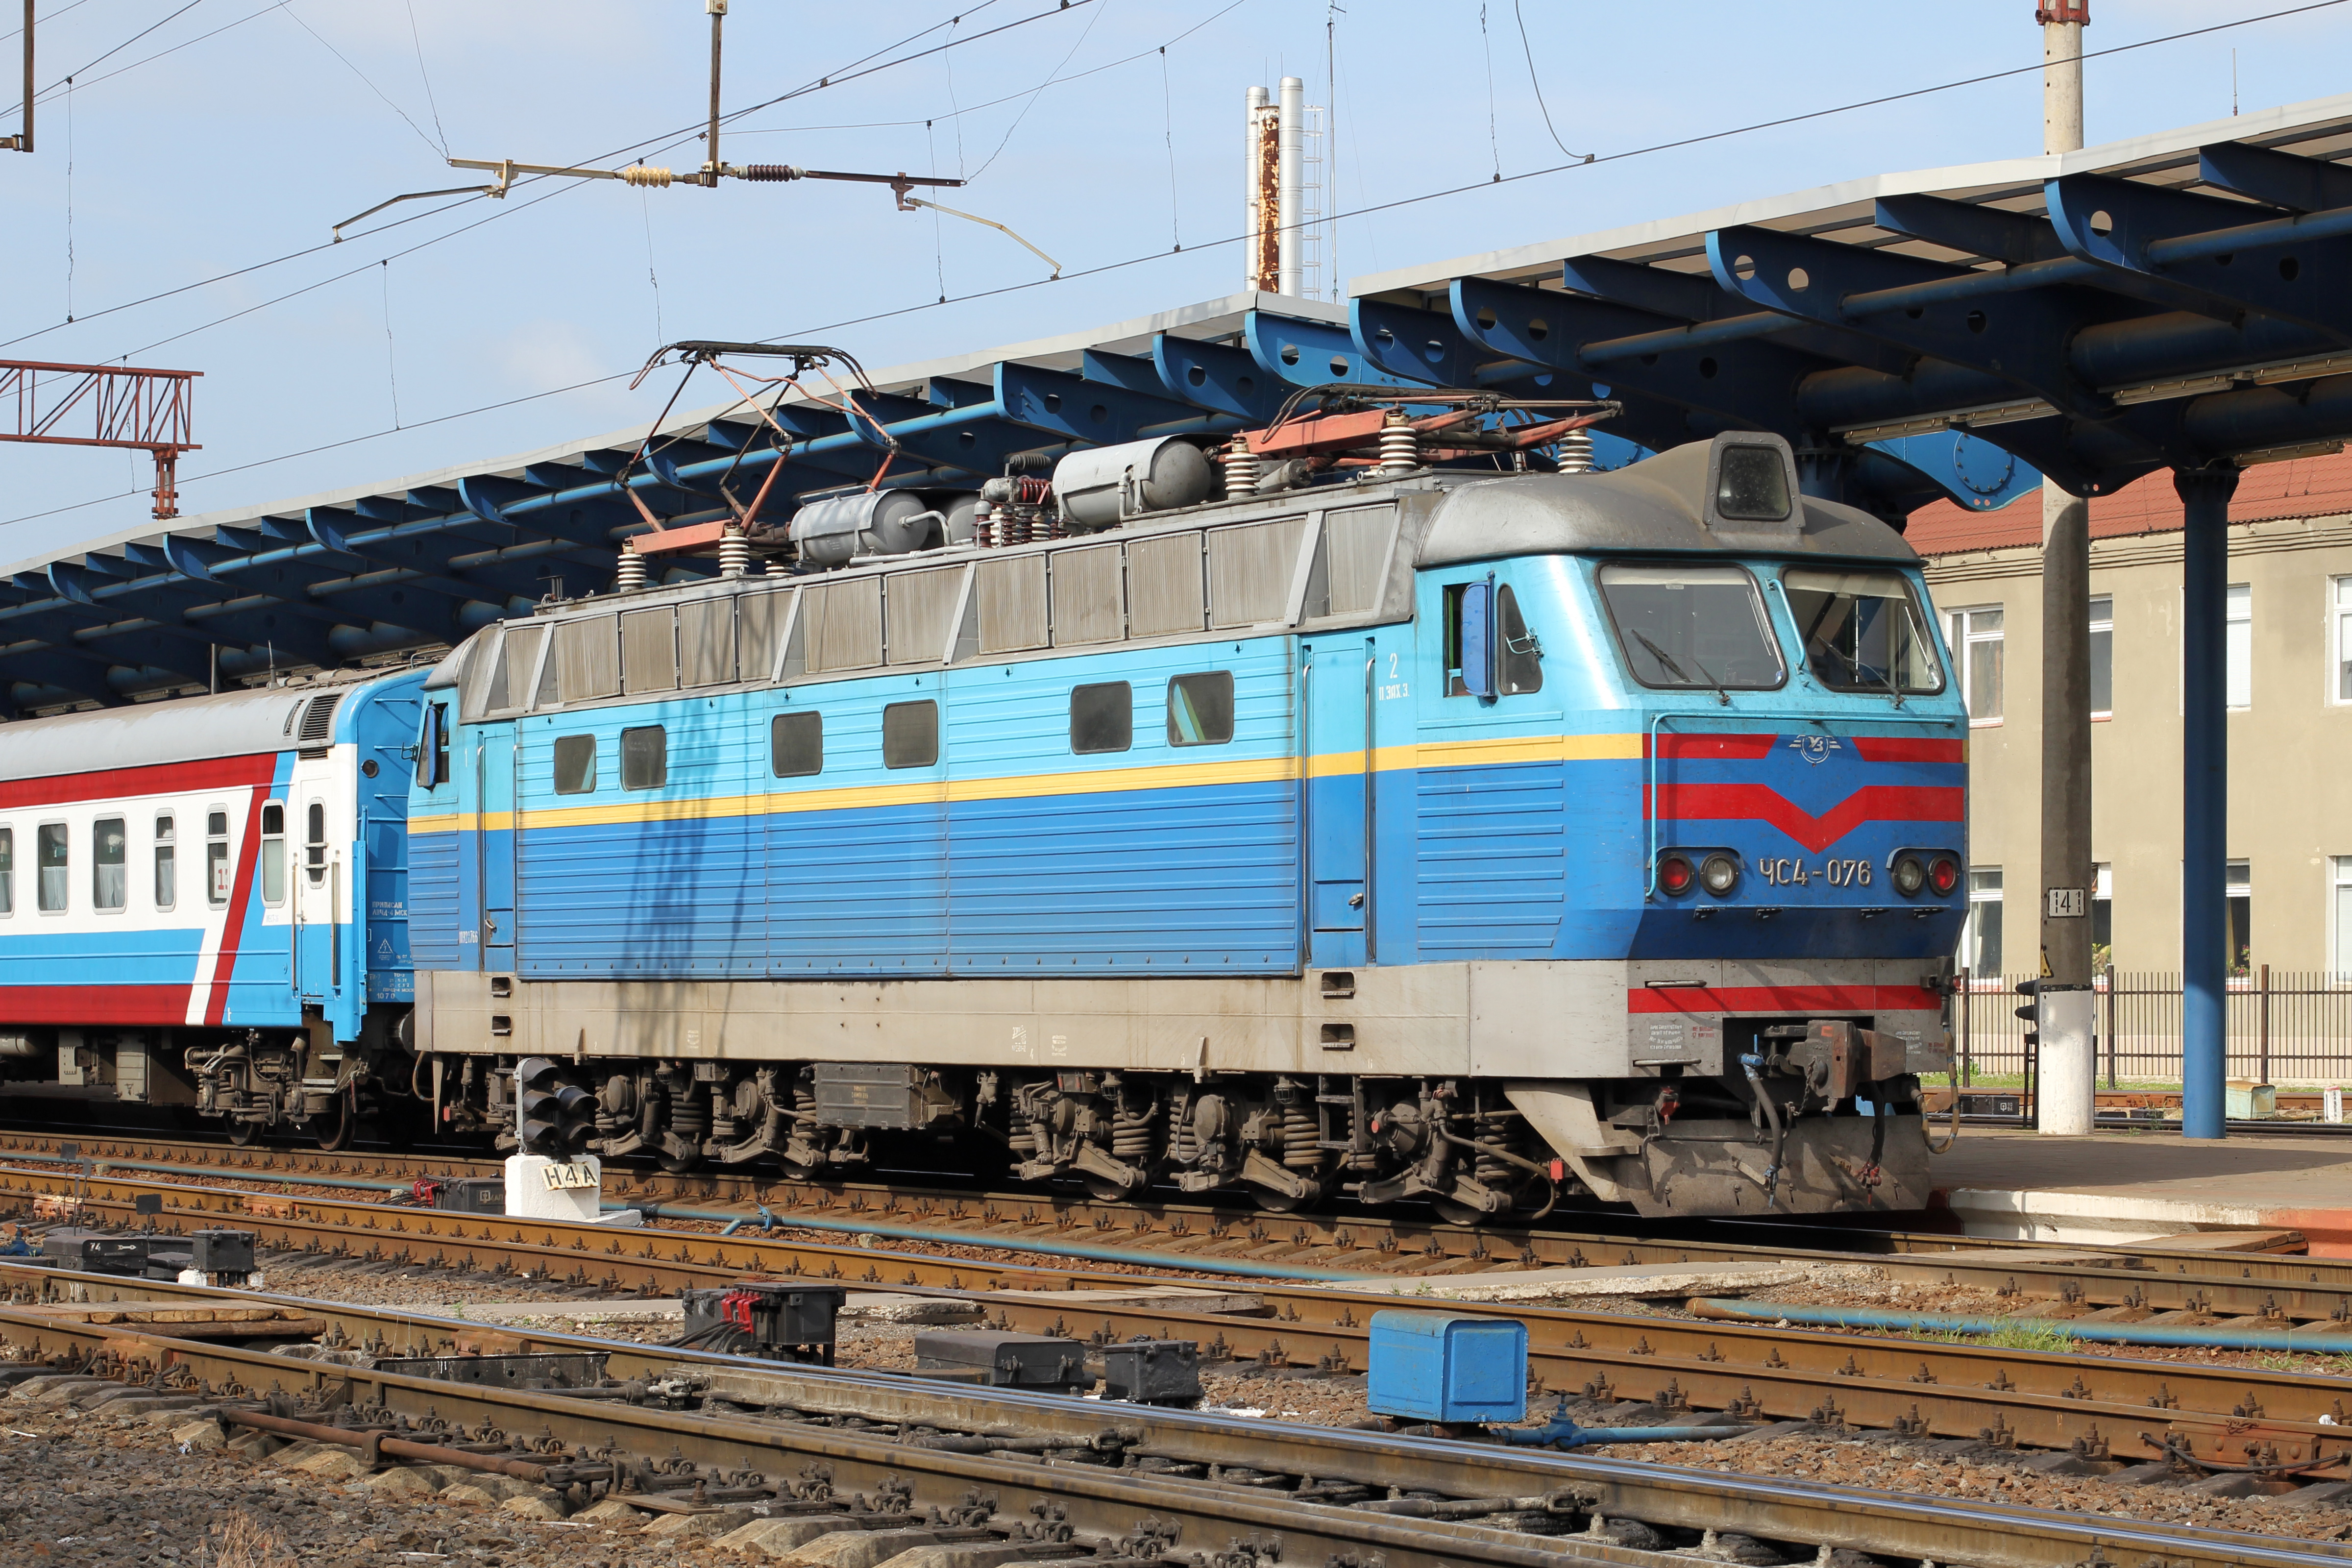 Locomotive ChS4-076 2013 G1